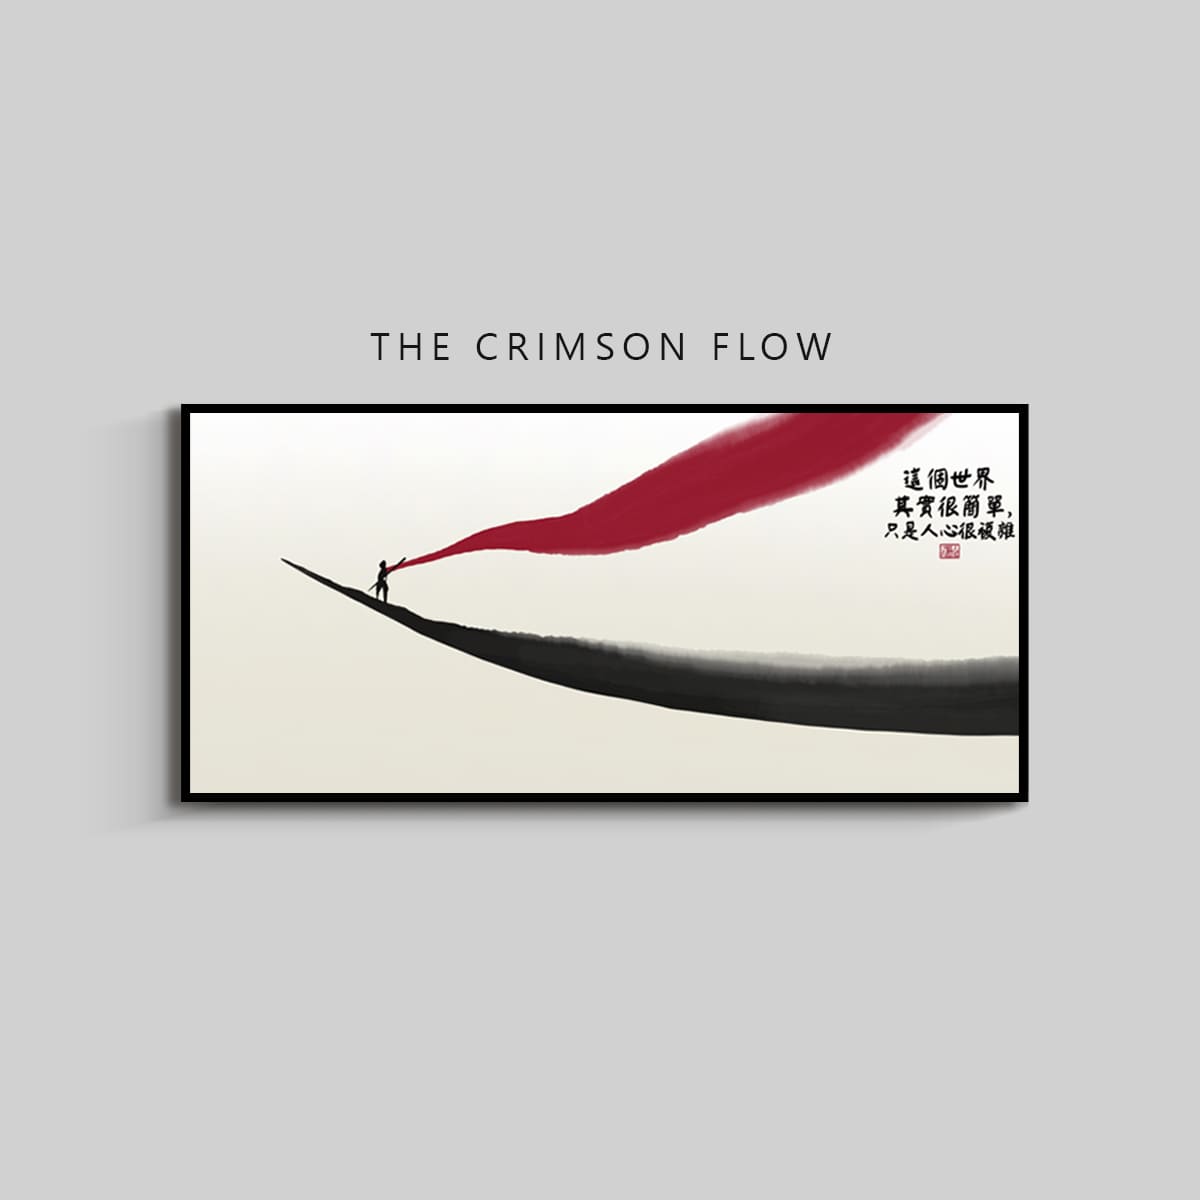 The Crimson Flow